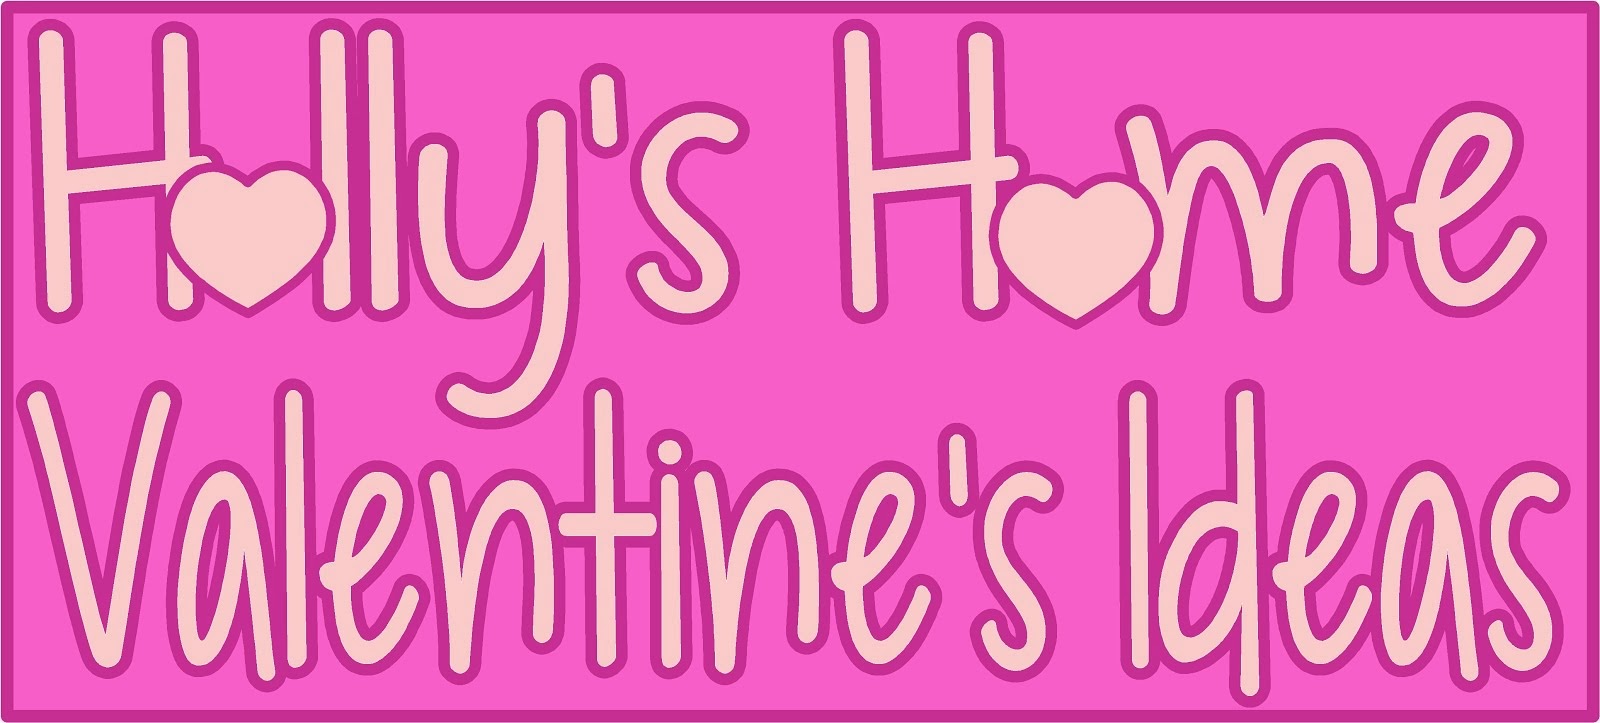 Holly's Home Valentine's Ideas